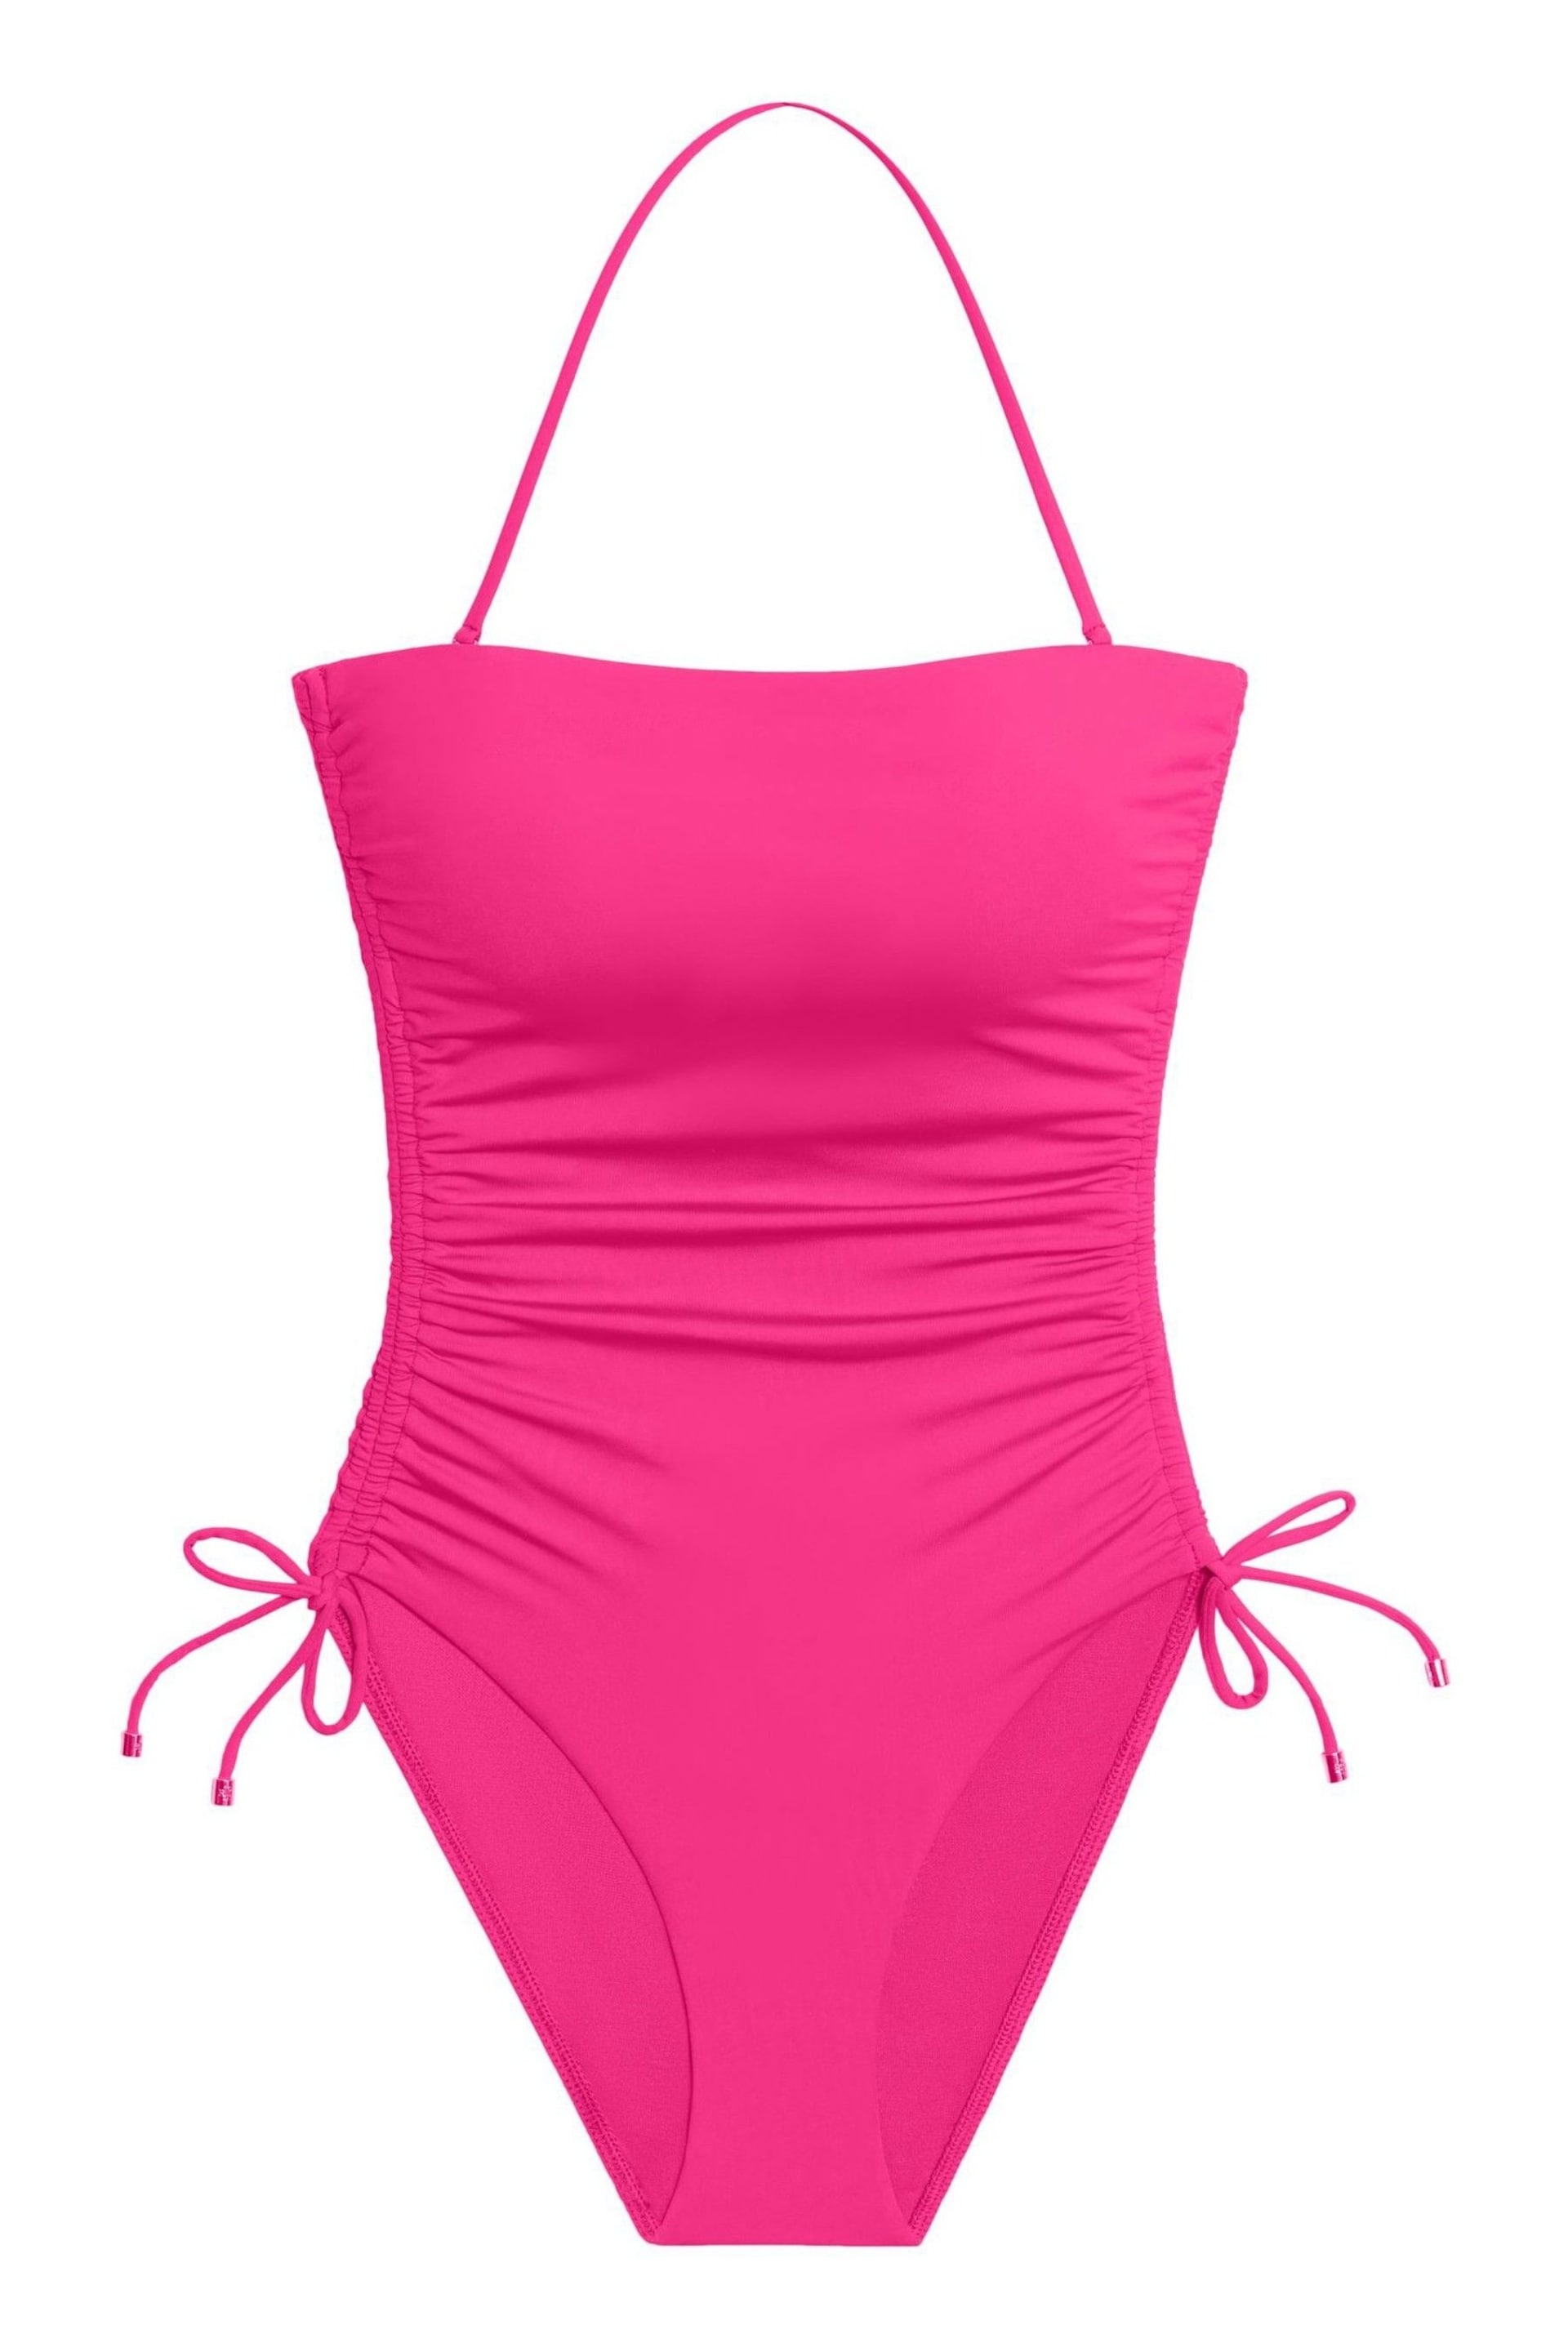 Lauren Ralph Lauren Pink Beach Club Solids Ruched Strapless Swimsuit - Image 5 of 5